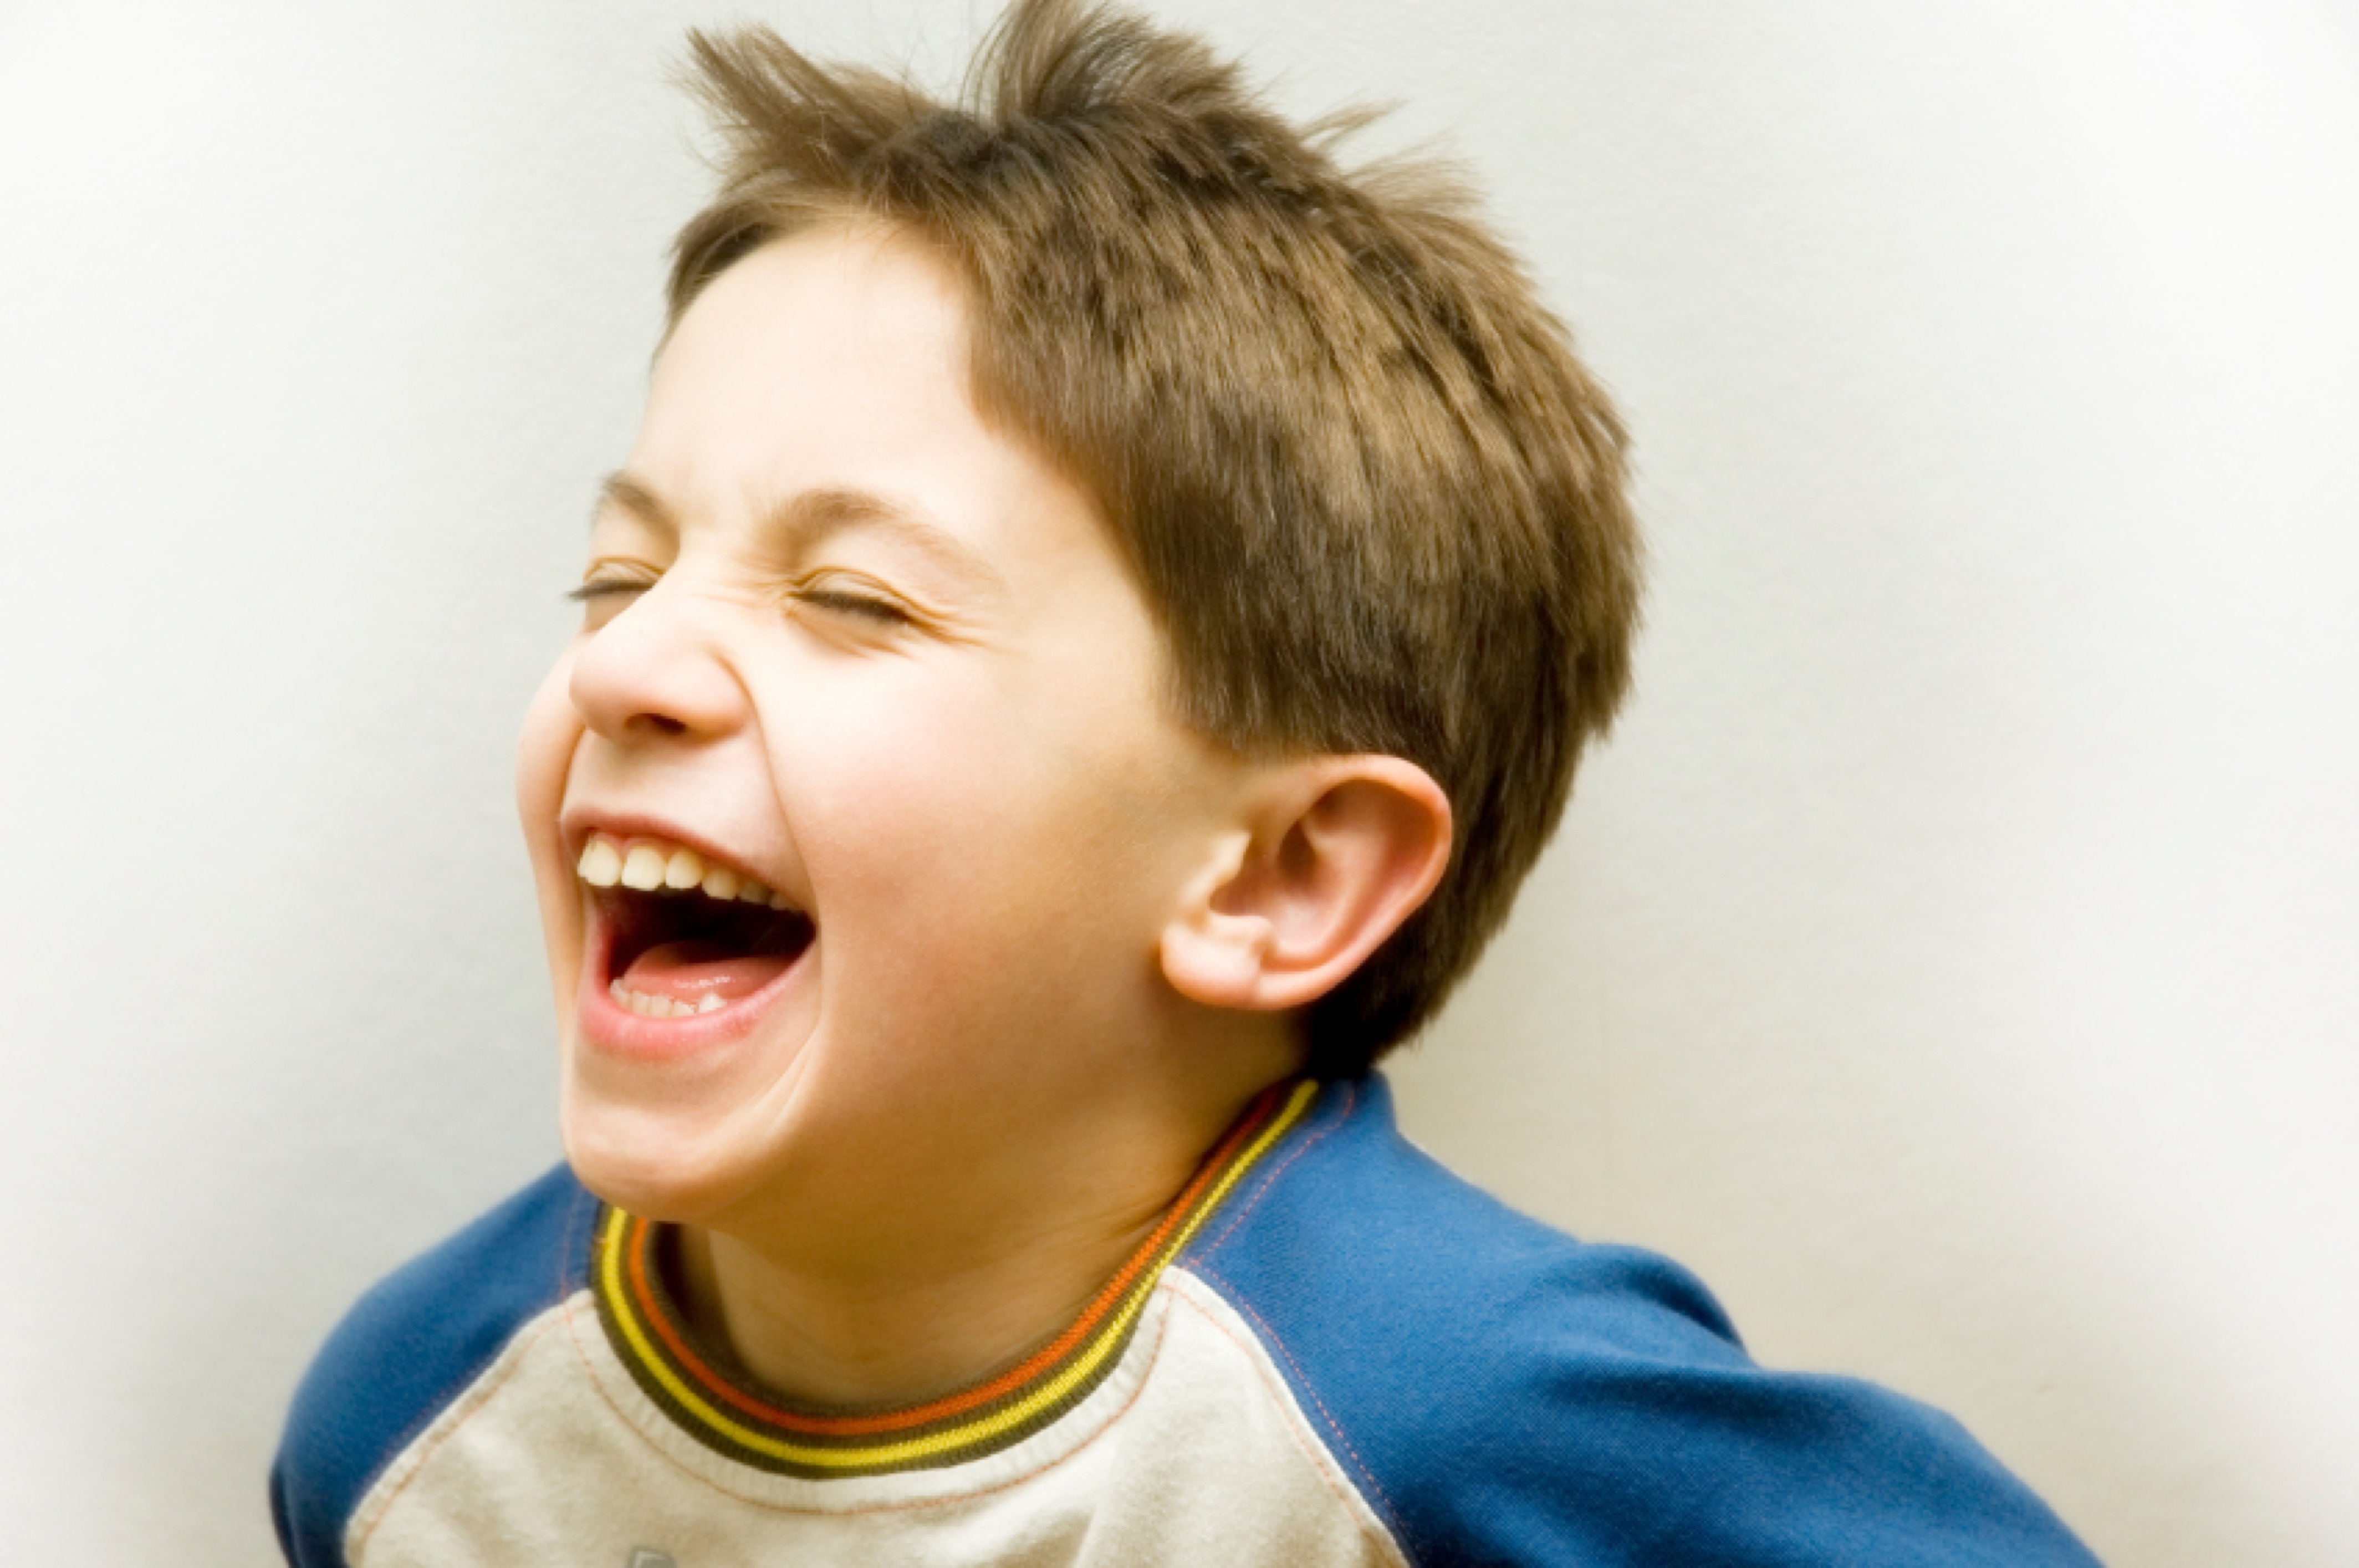 laughter healthy health benefits medicine amoils brain